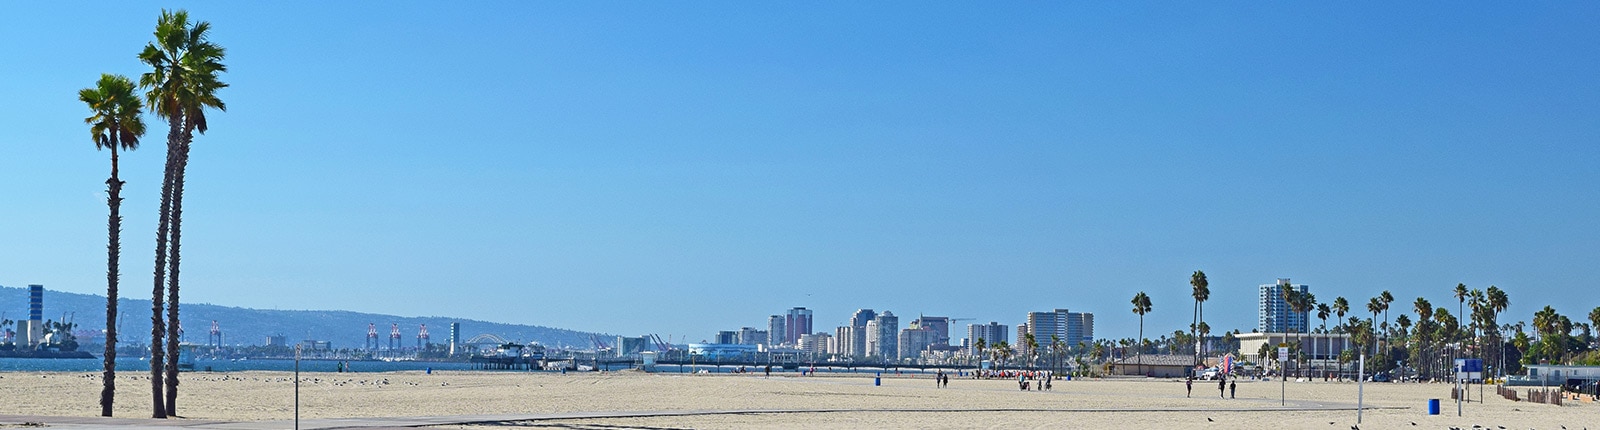 The beach and beach activities in Long Beach, CA